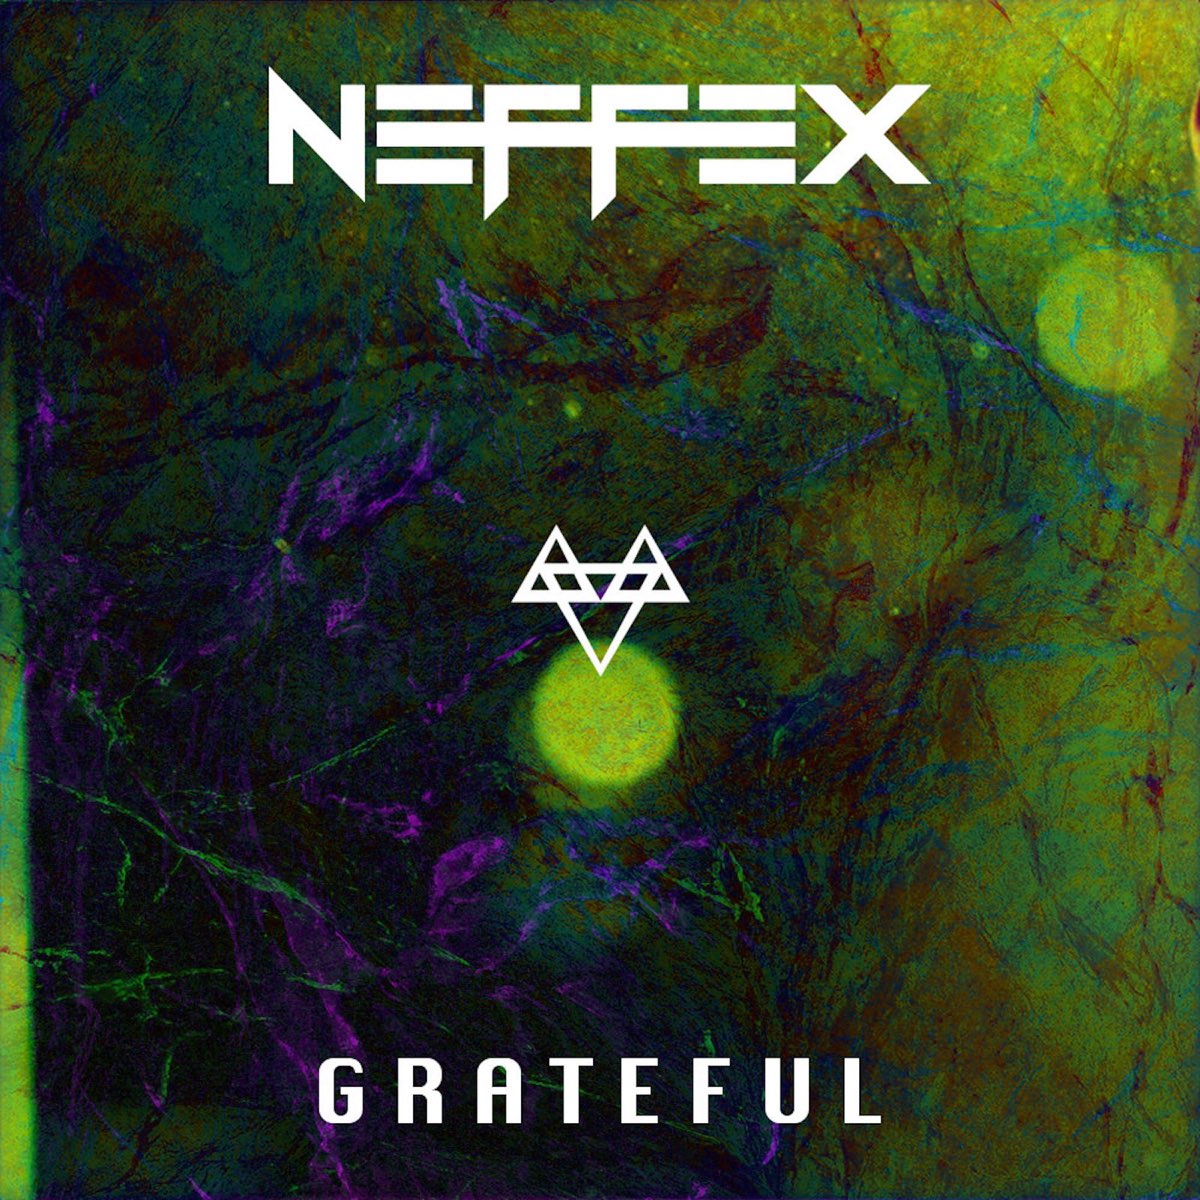 Neffex grateful lyrics